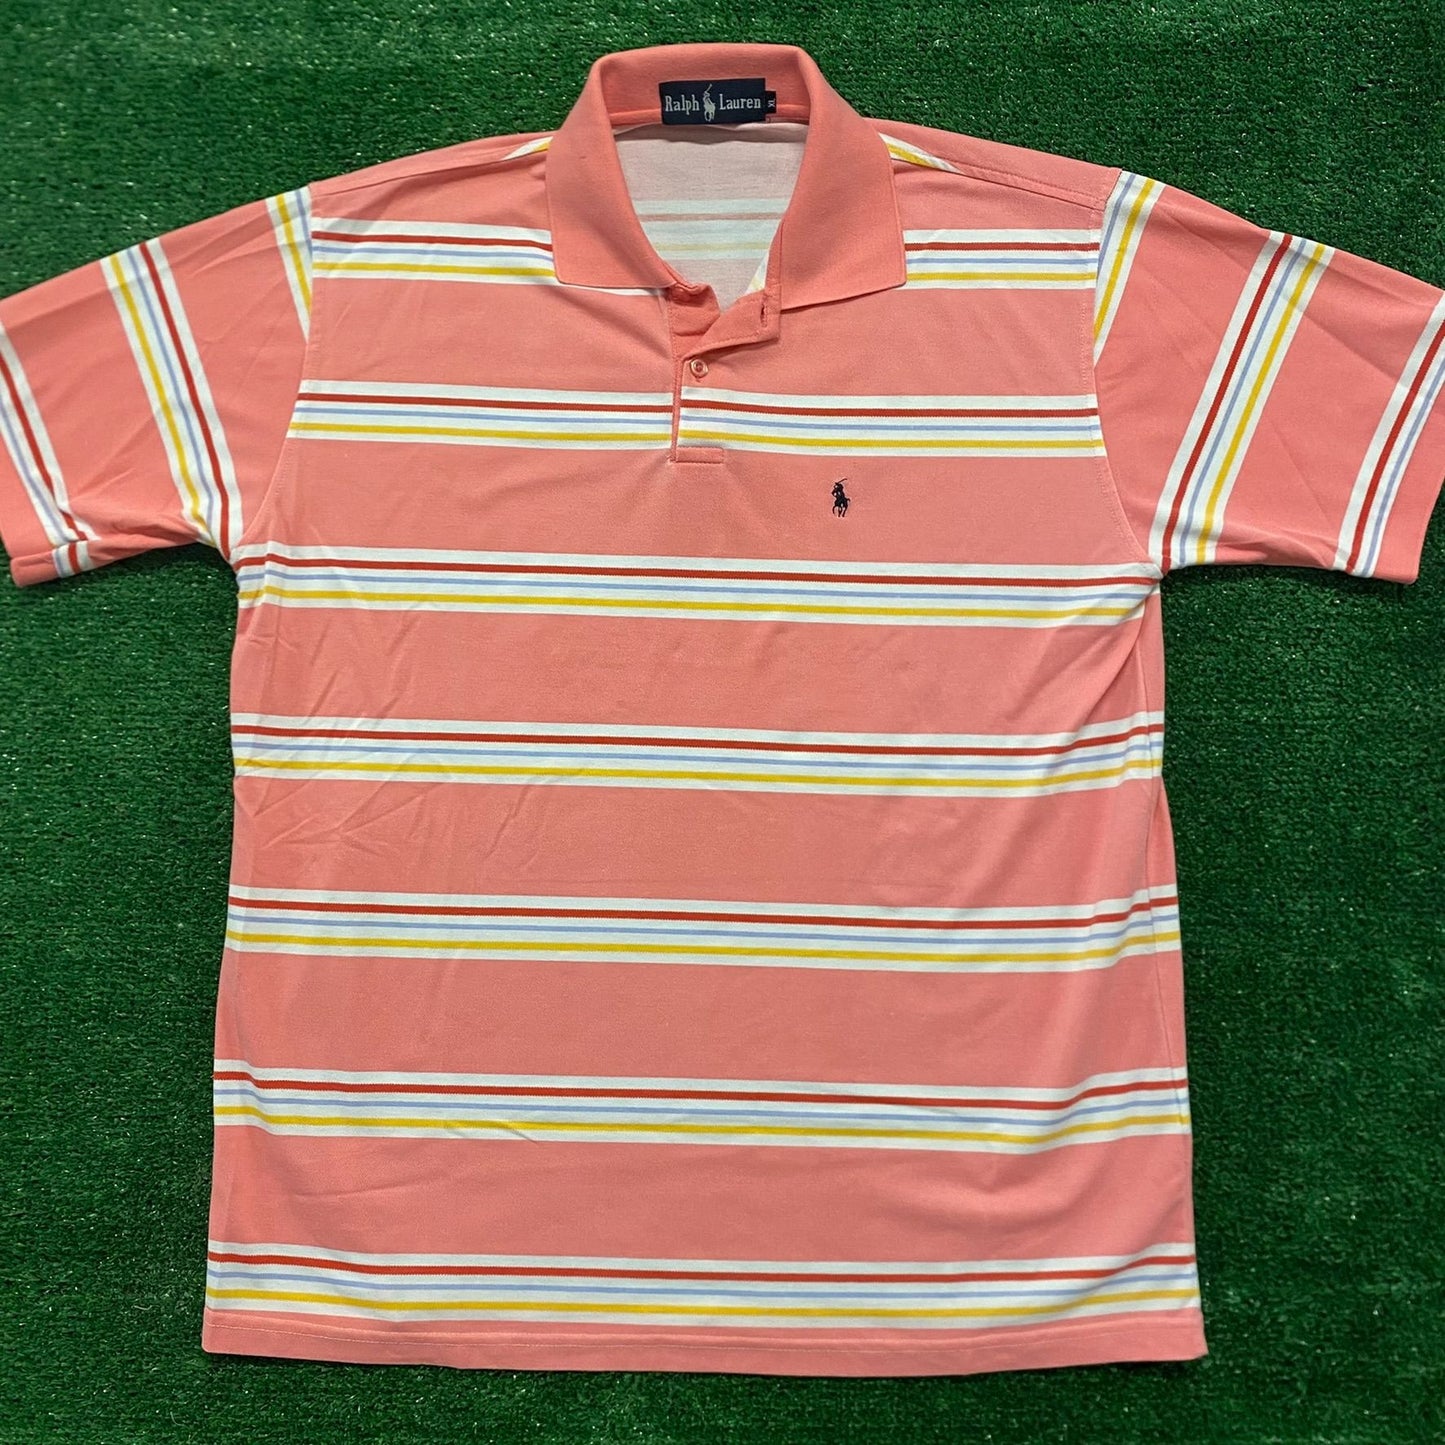 Ralph Lauren Pink Striped Vintage Preppy Polo Shirt